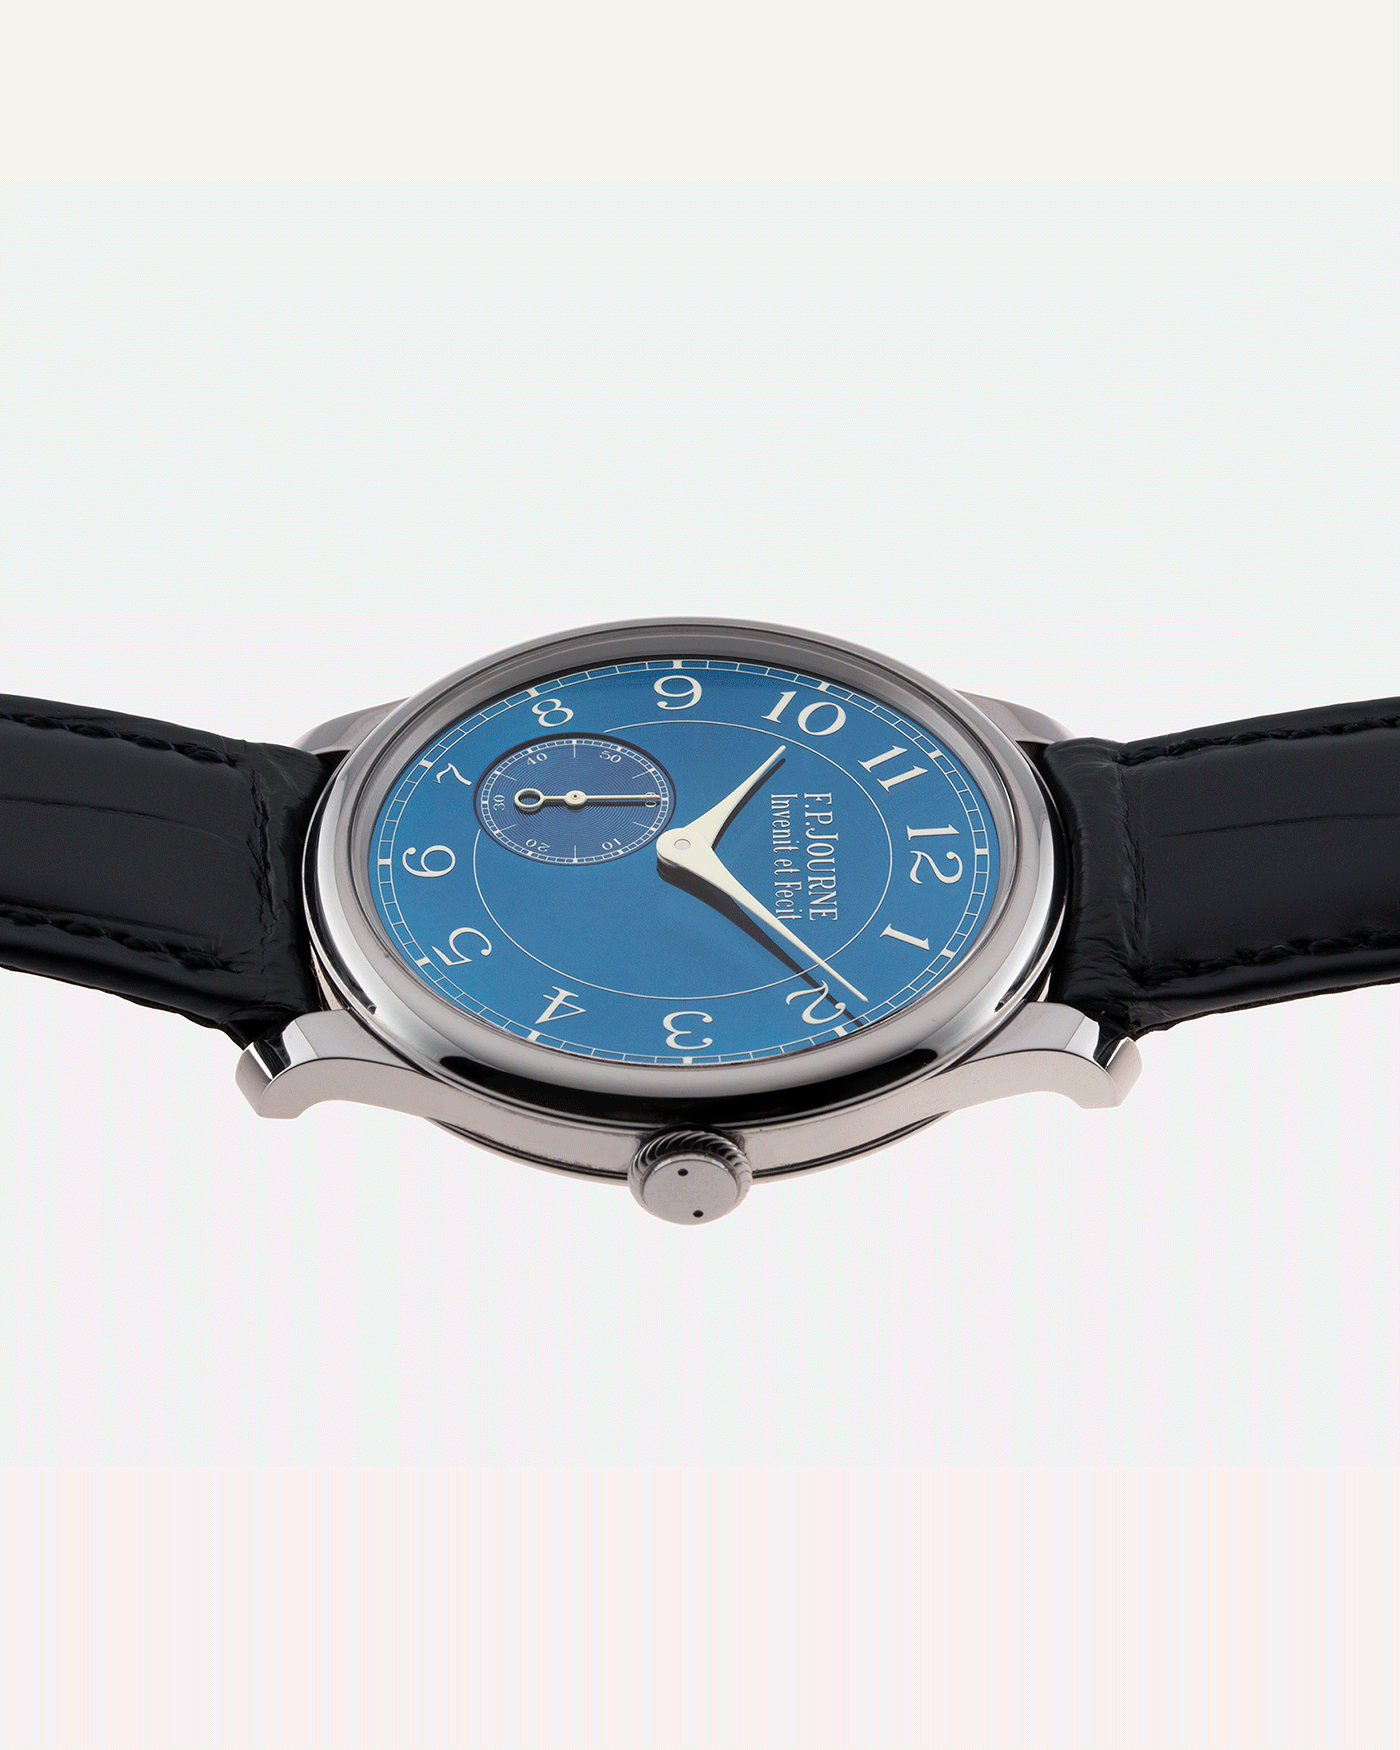 Brand: F.P. Journe Year: 2019 Model: Chronometre Bleu Material: Tantalum Movement: in-house FPJ calibre 1304 Case Diameter: 39mm Bracelet/Strap: F.P. Journe Blue Alligator and Tantalum Tang Buckle